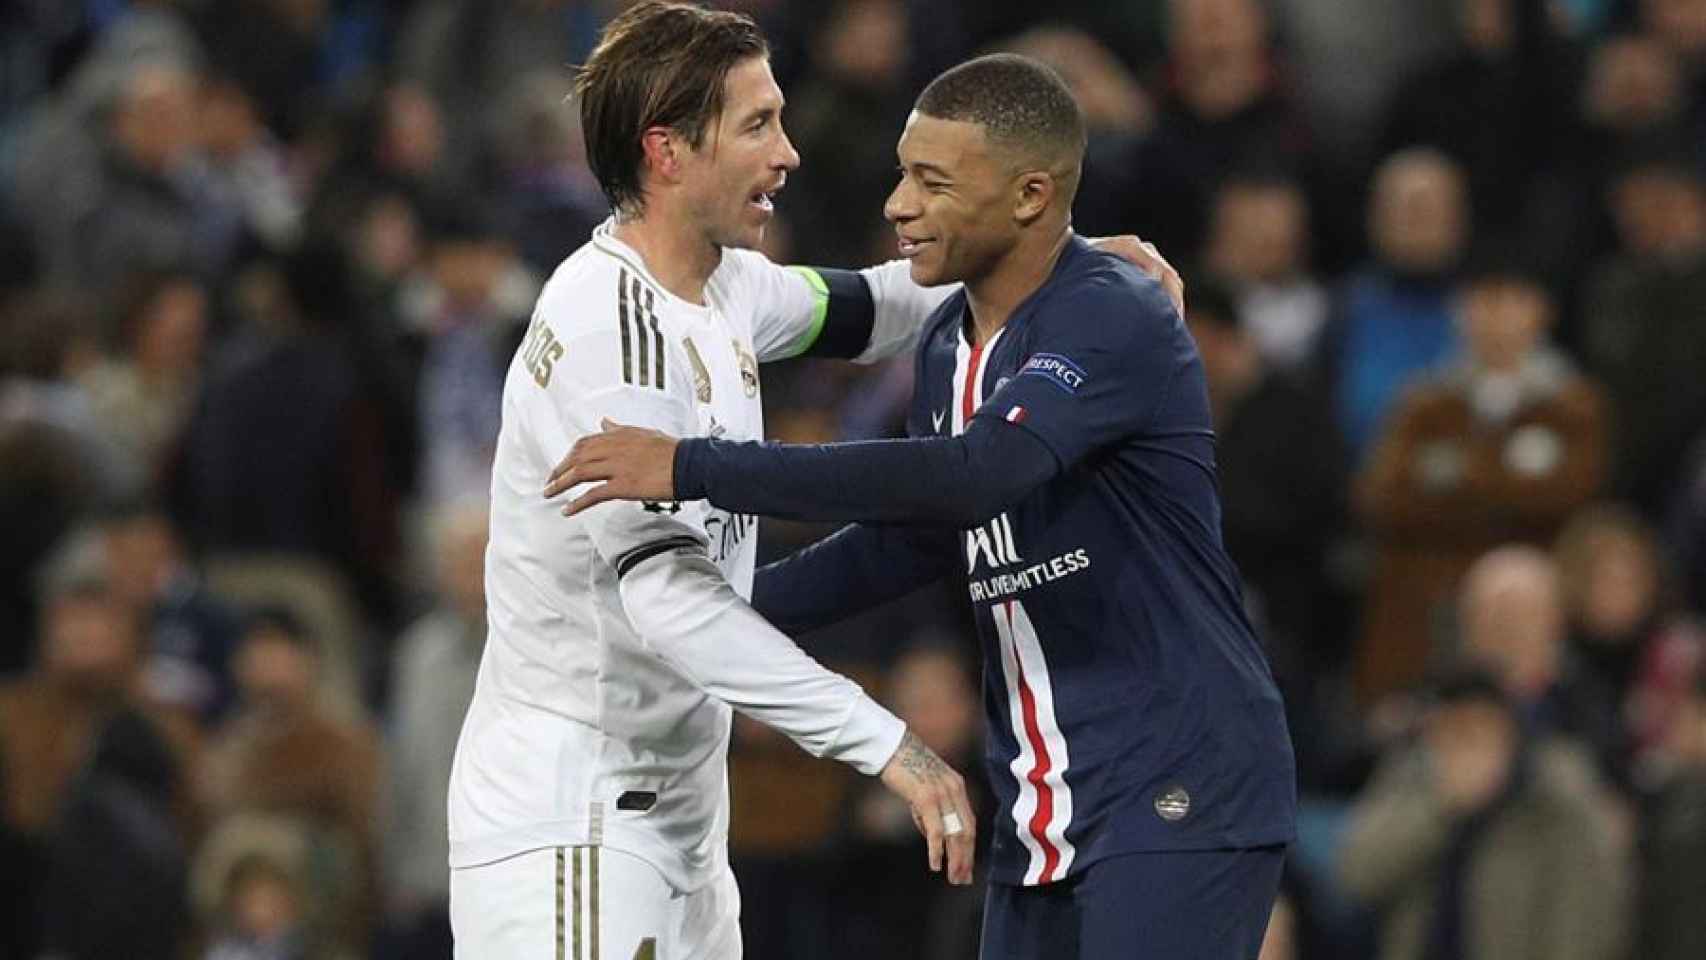 Abrazo entre Sergio Ramos y Kylian Mbappé